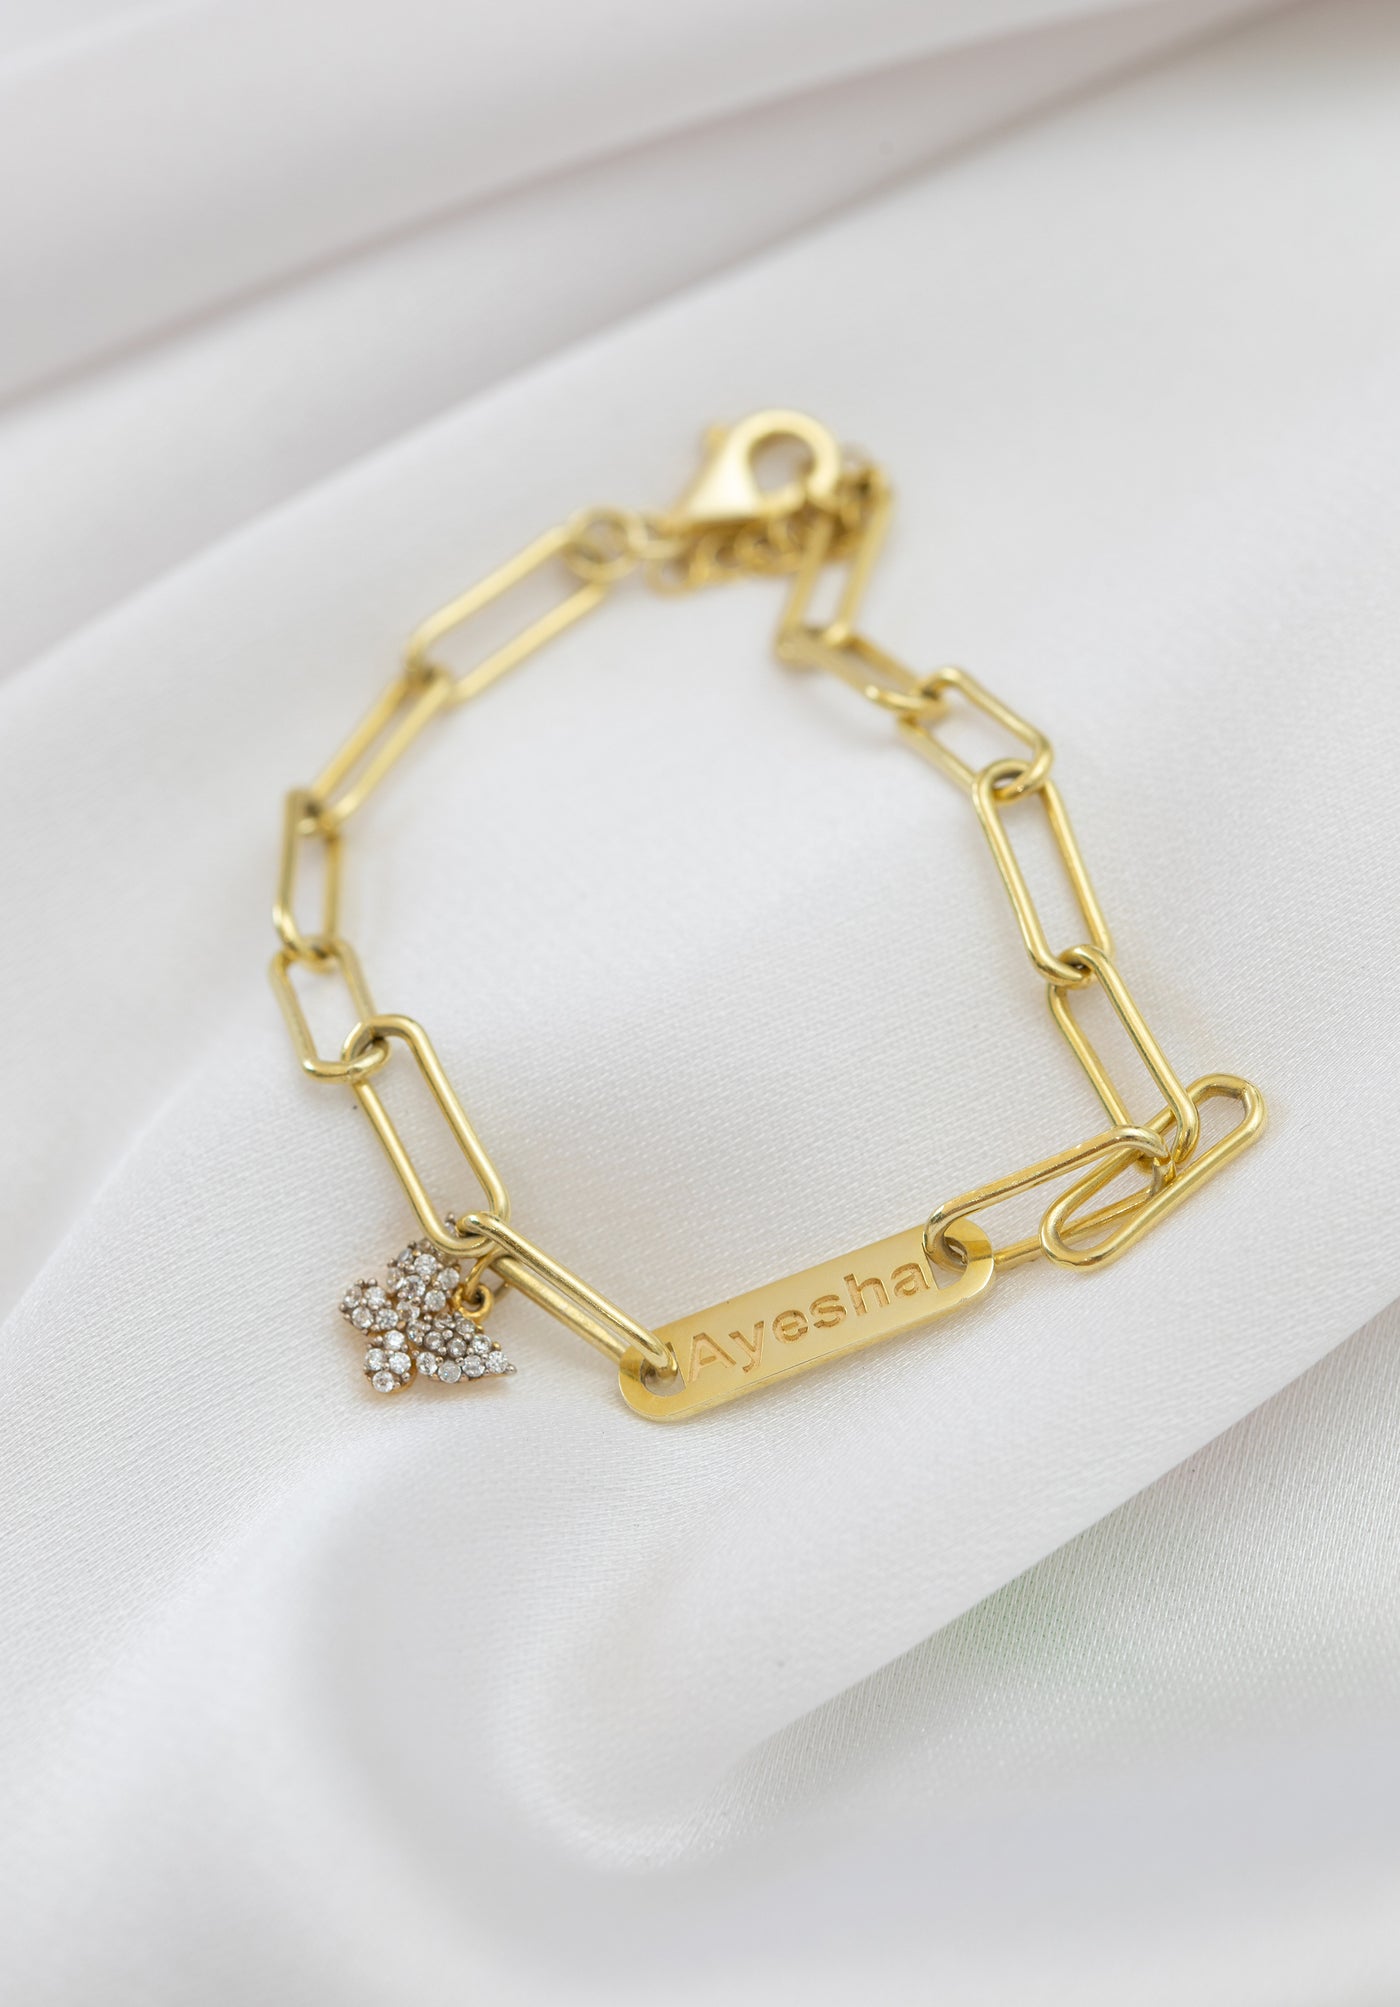 Bracelet With Arabic Name 